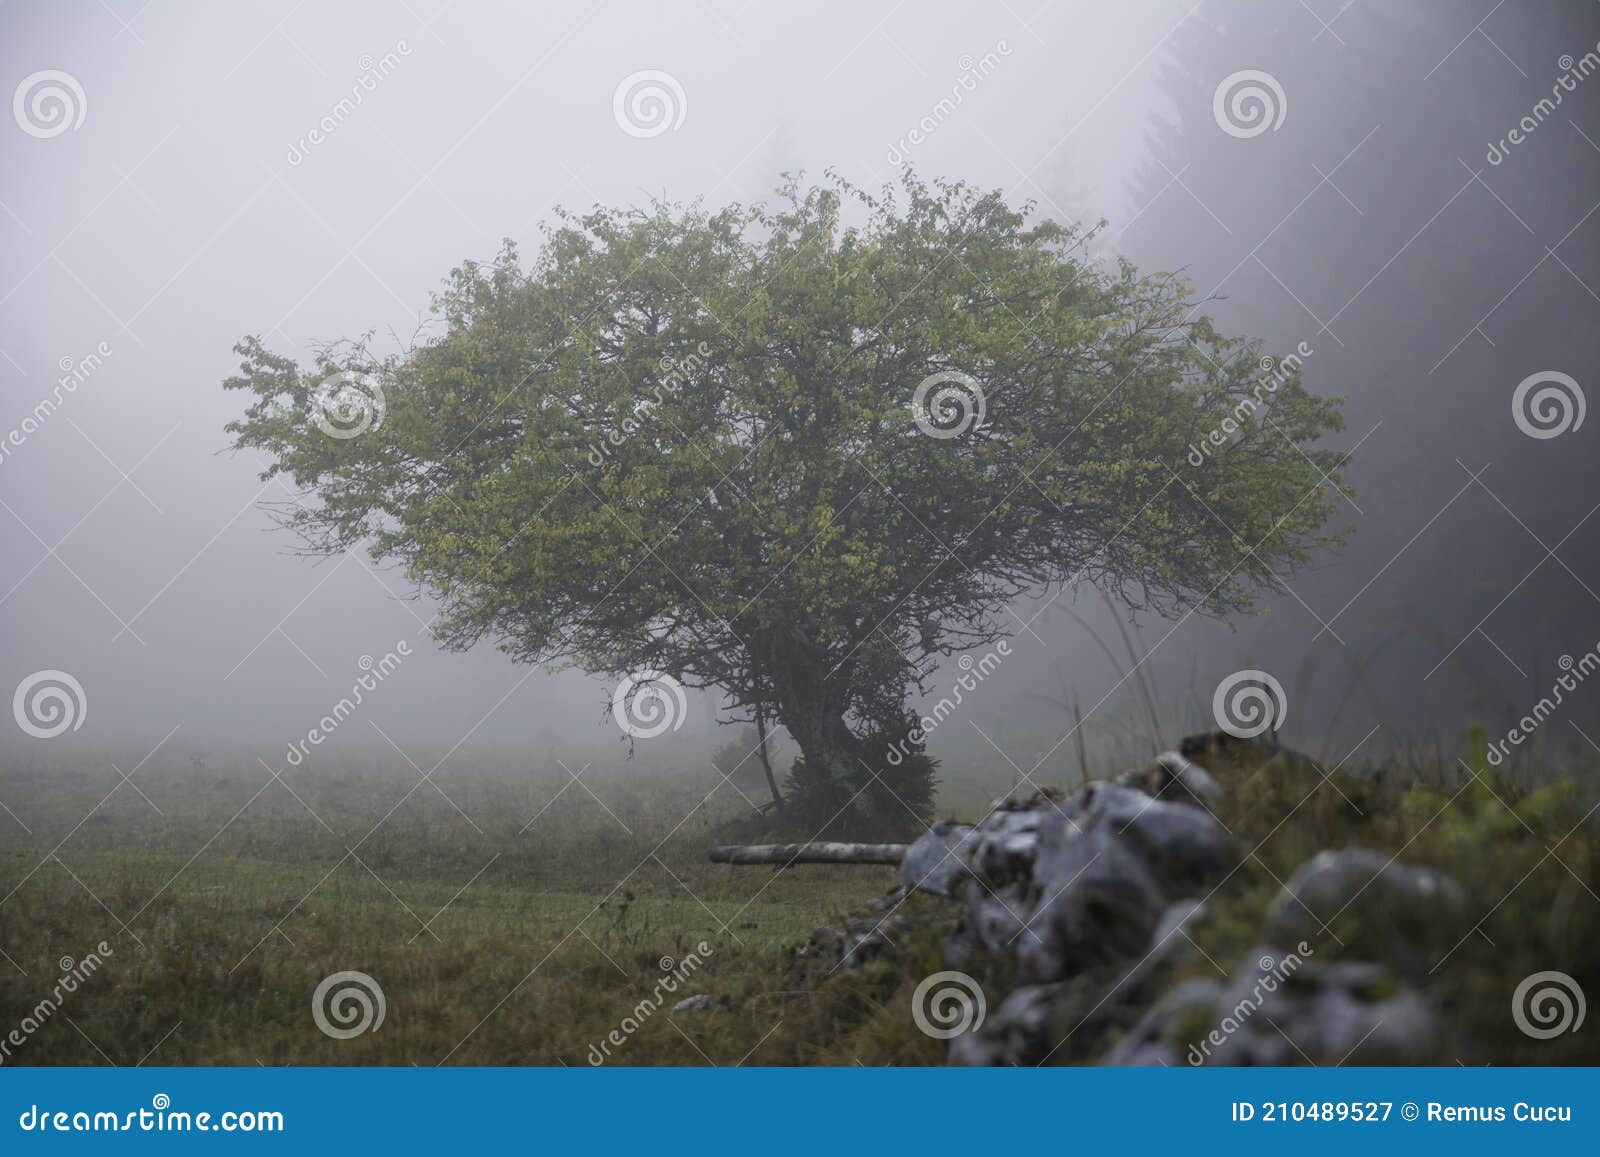 single tree in the fog. dramatic scene